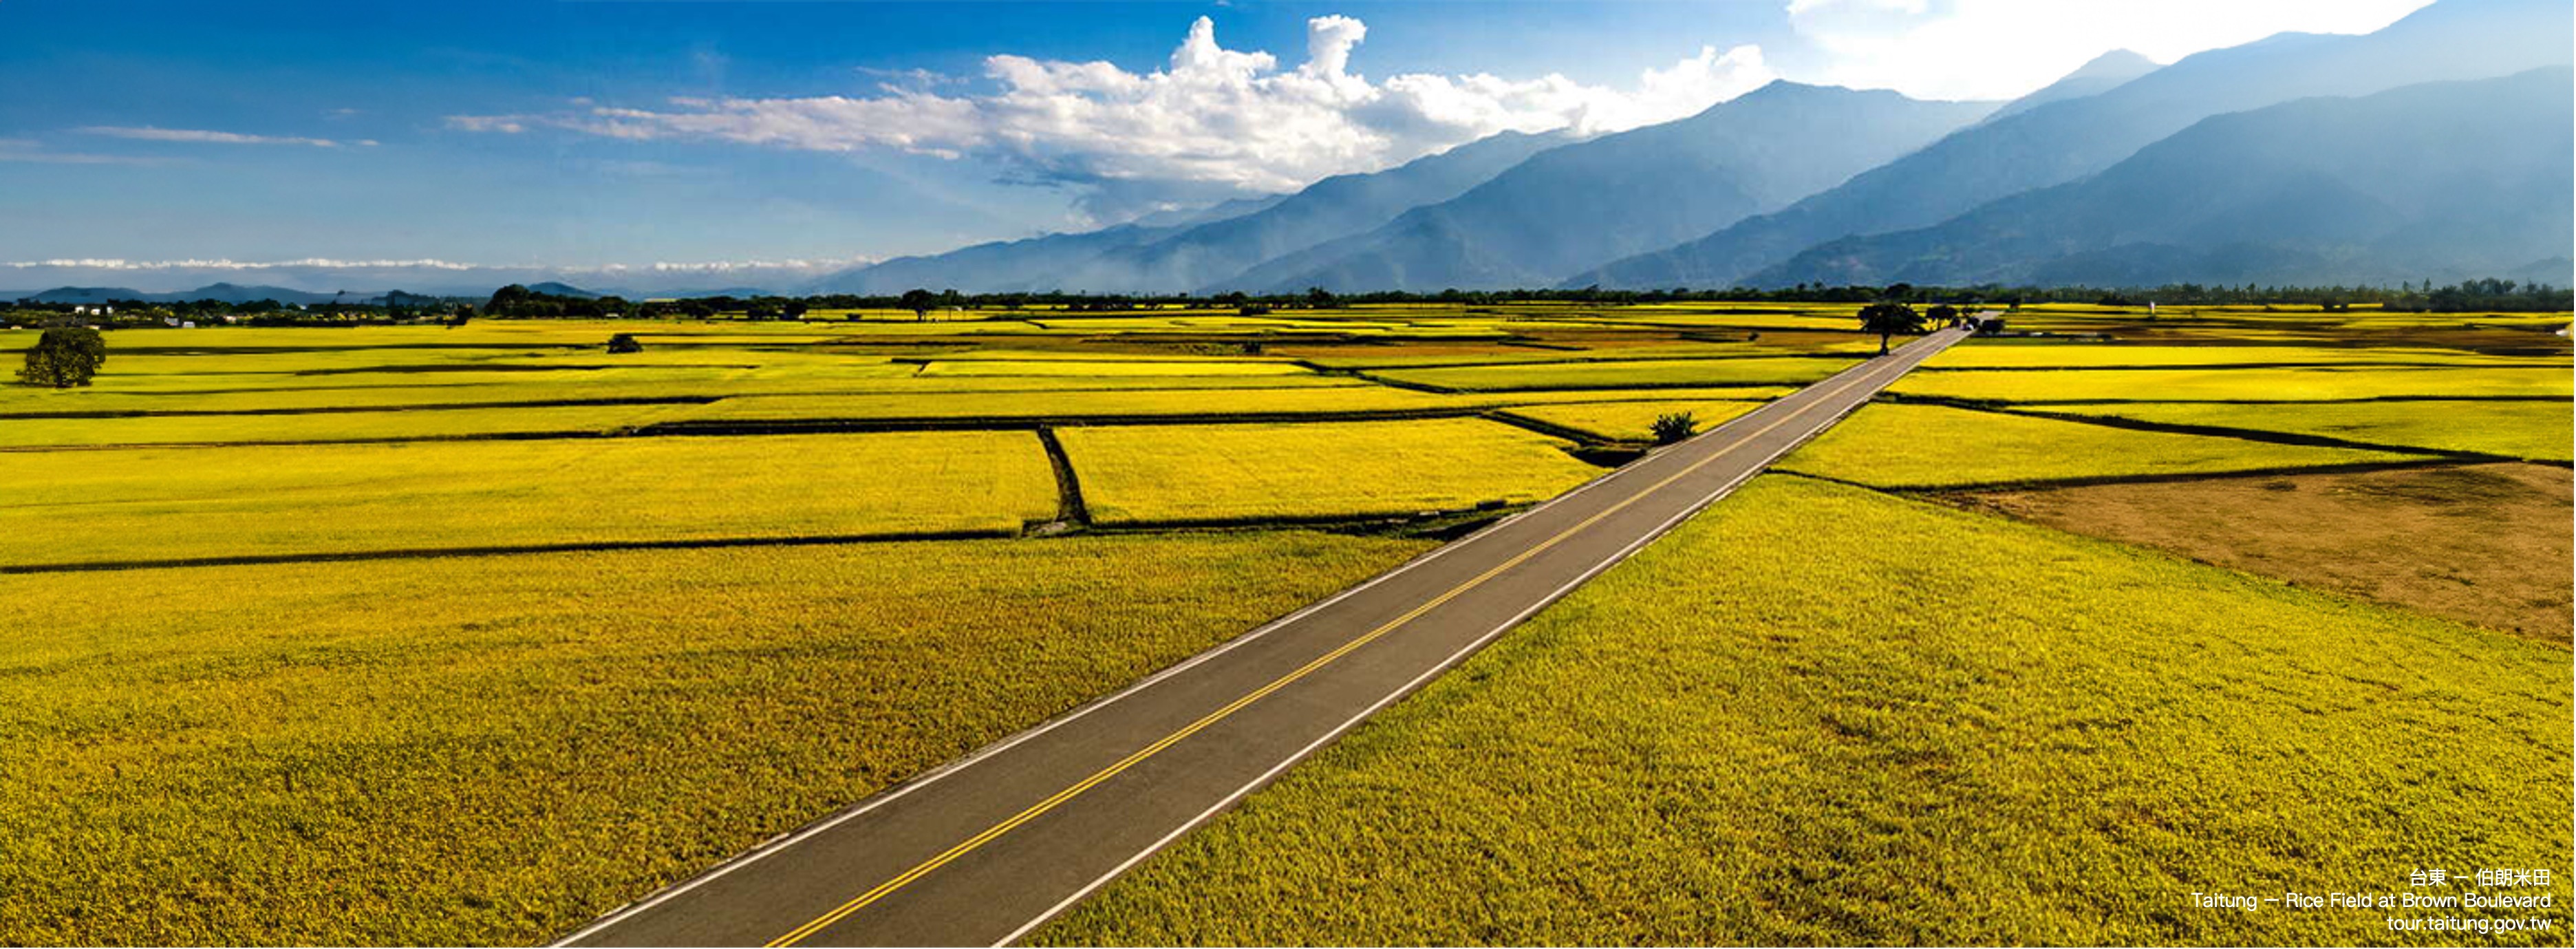 Taitung rice field at brown boulevard